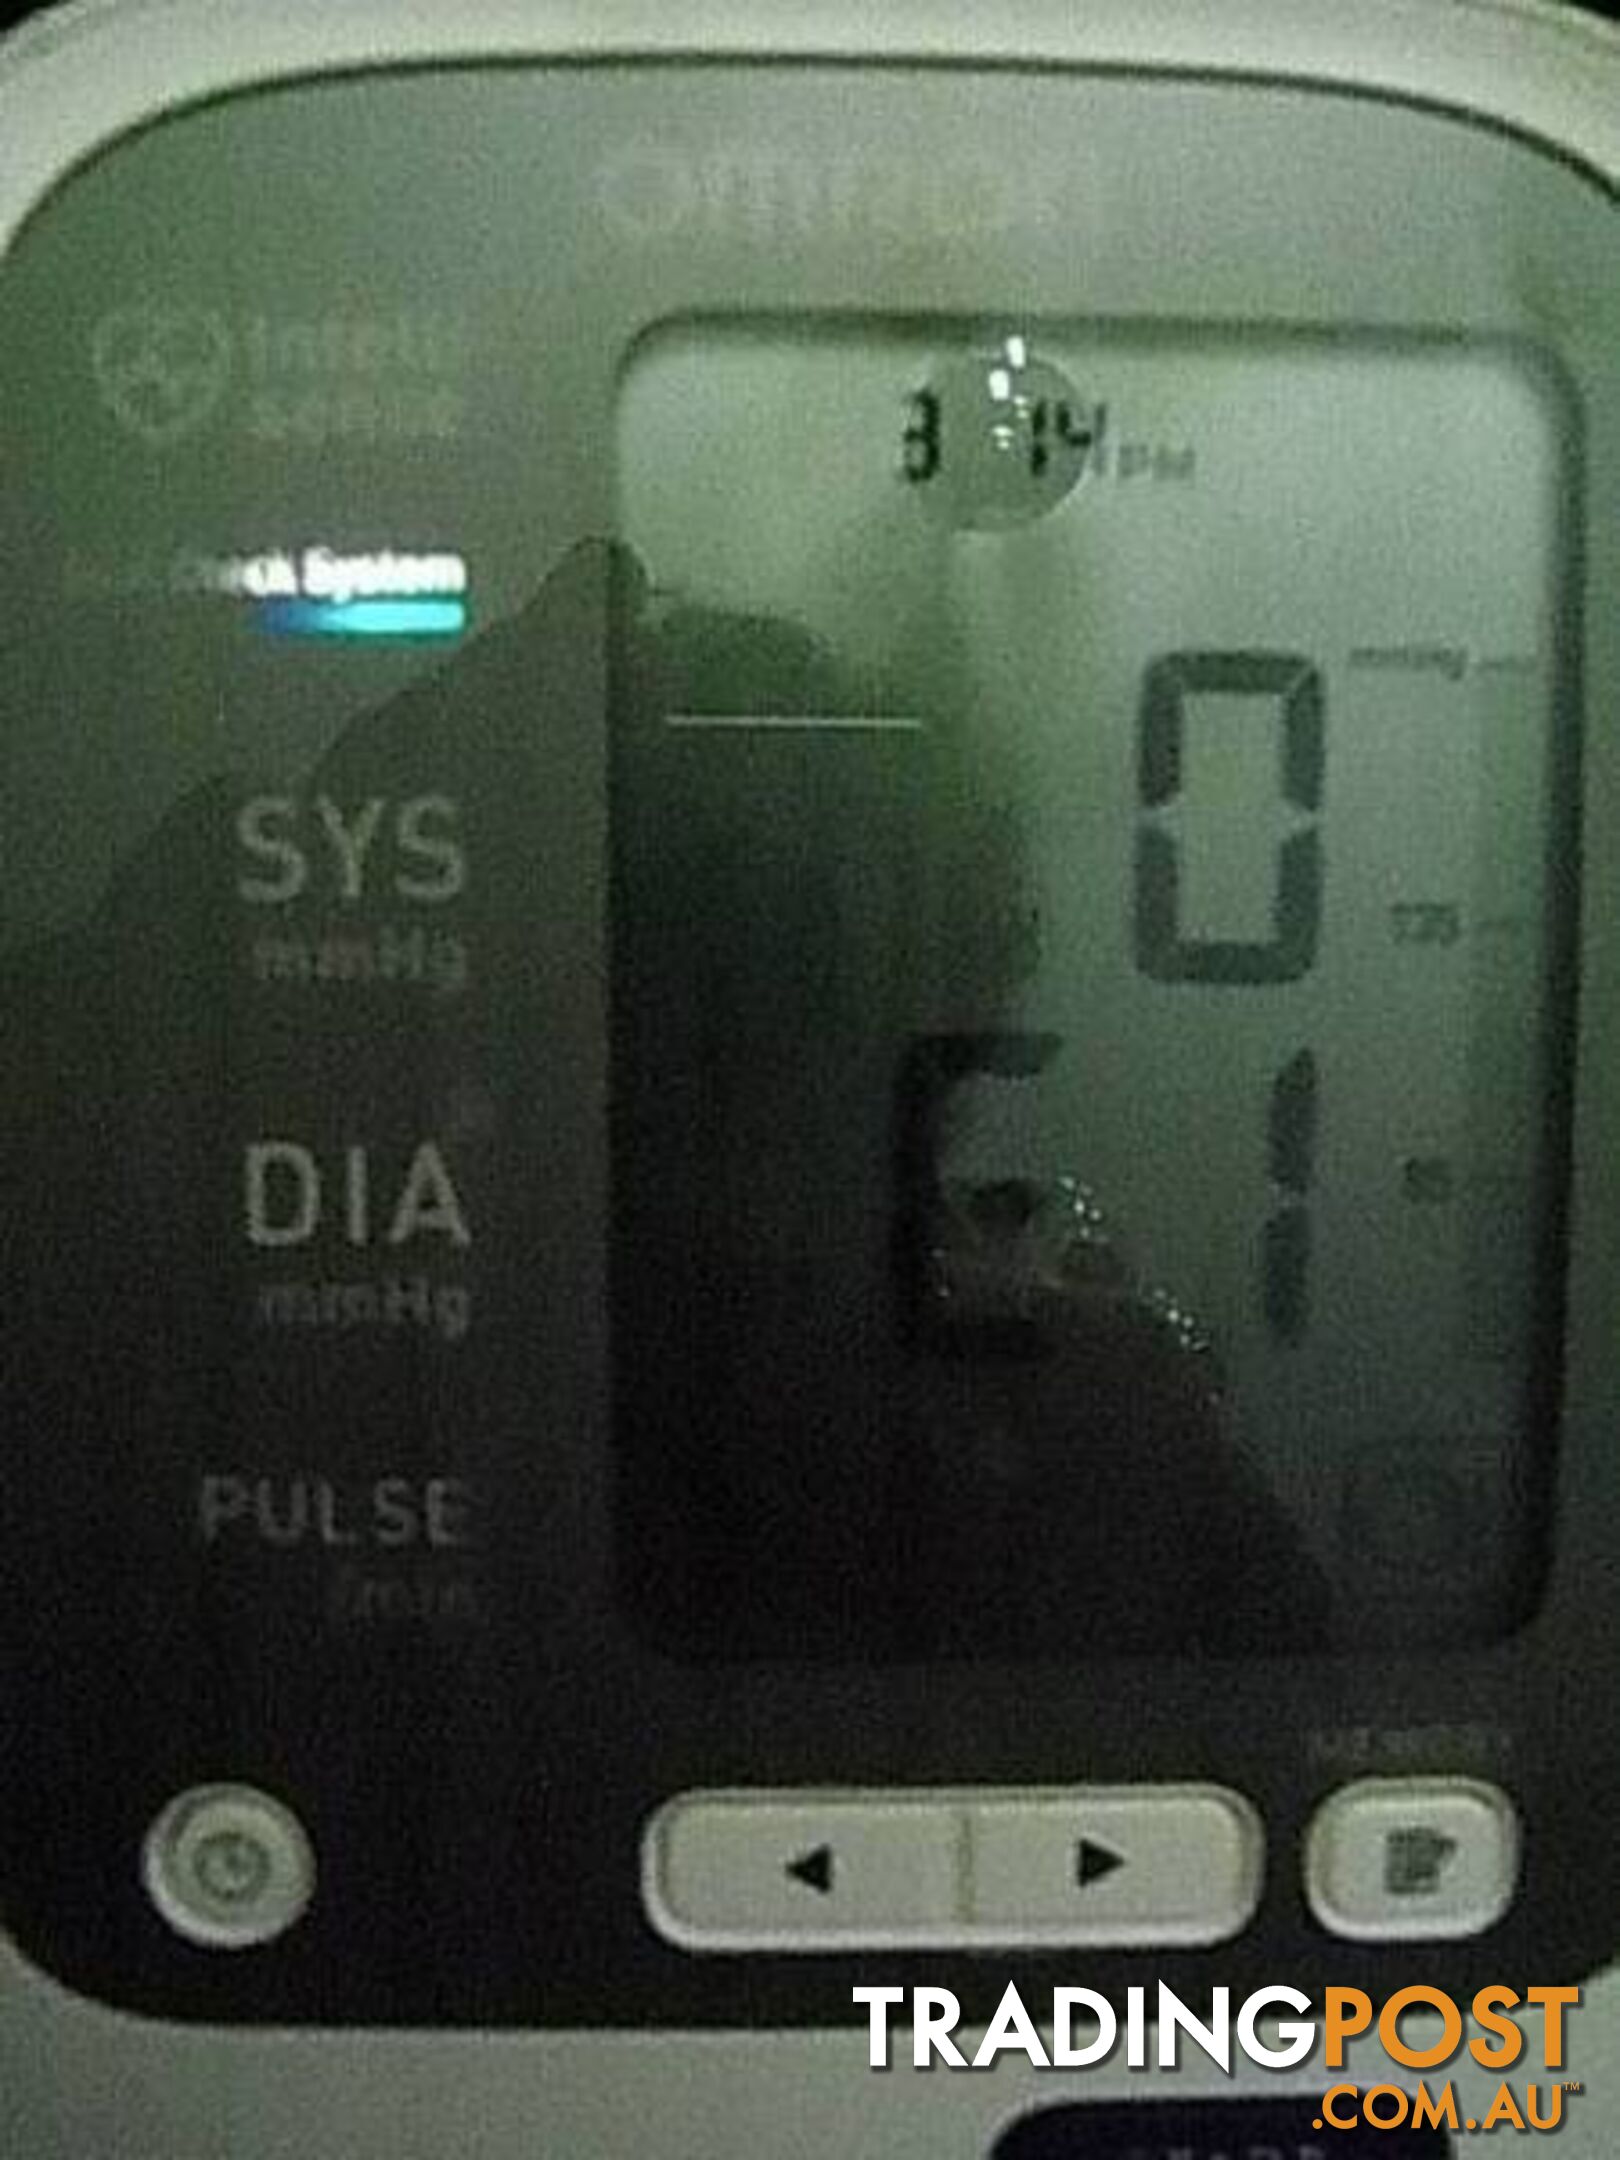 Omron blood pressure monitor HEM-7221 ARTG 10039 Brand New for qu